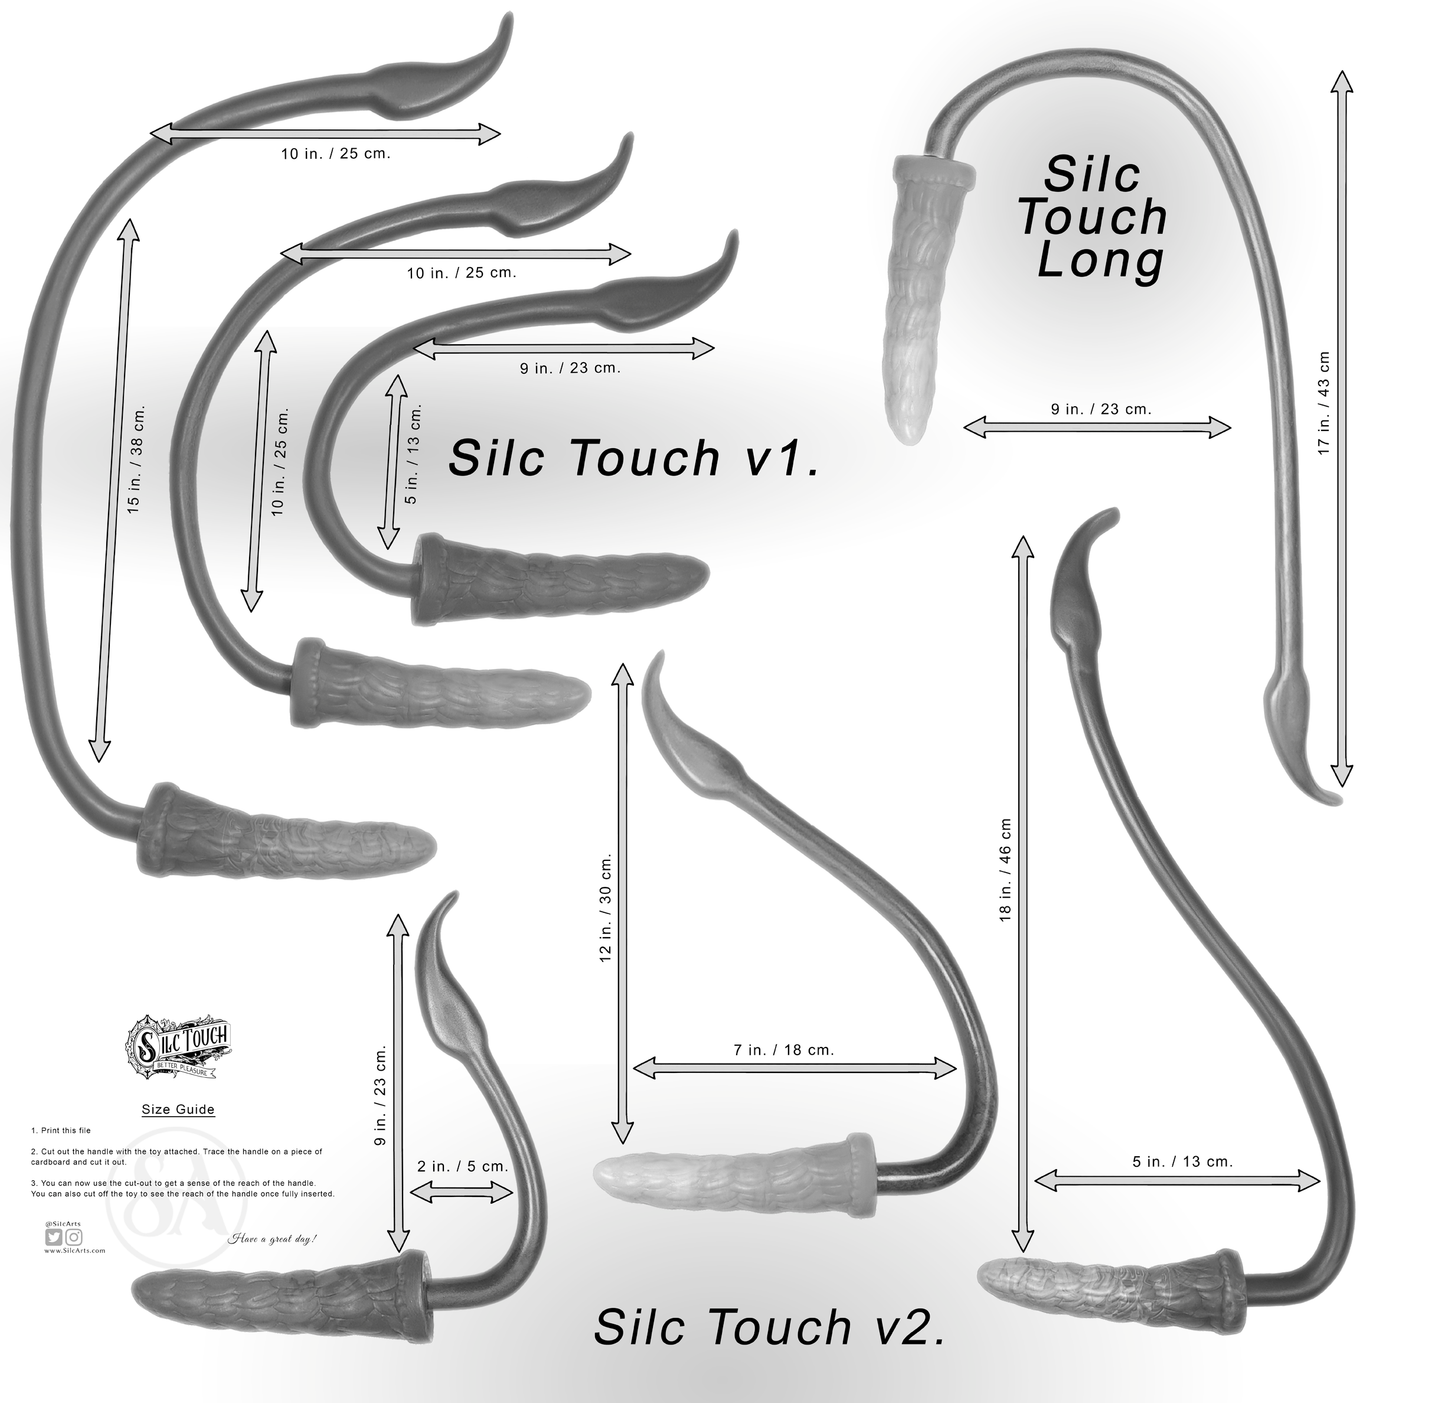 Silc Touch v2. - Ergonomic handle - VacLoc - Sm